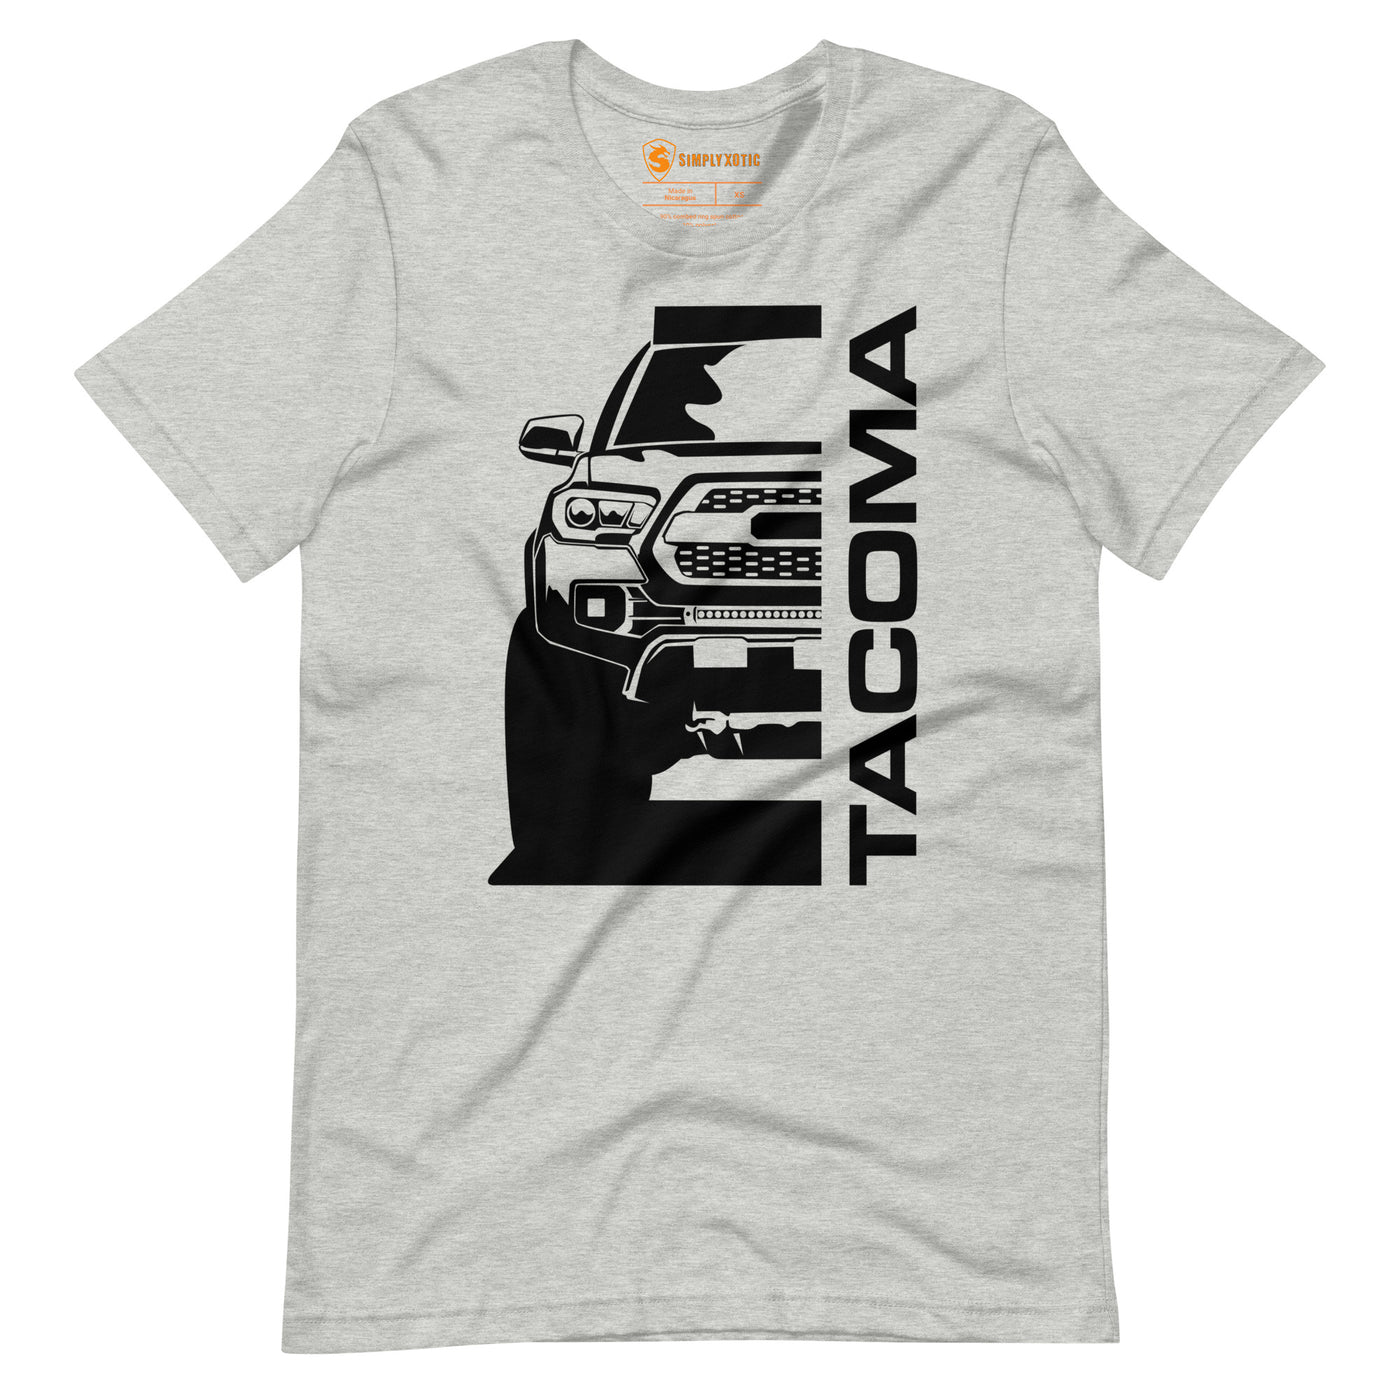 Tacoma T-shirt